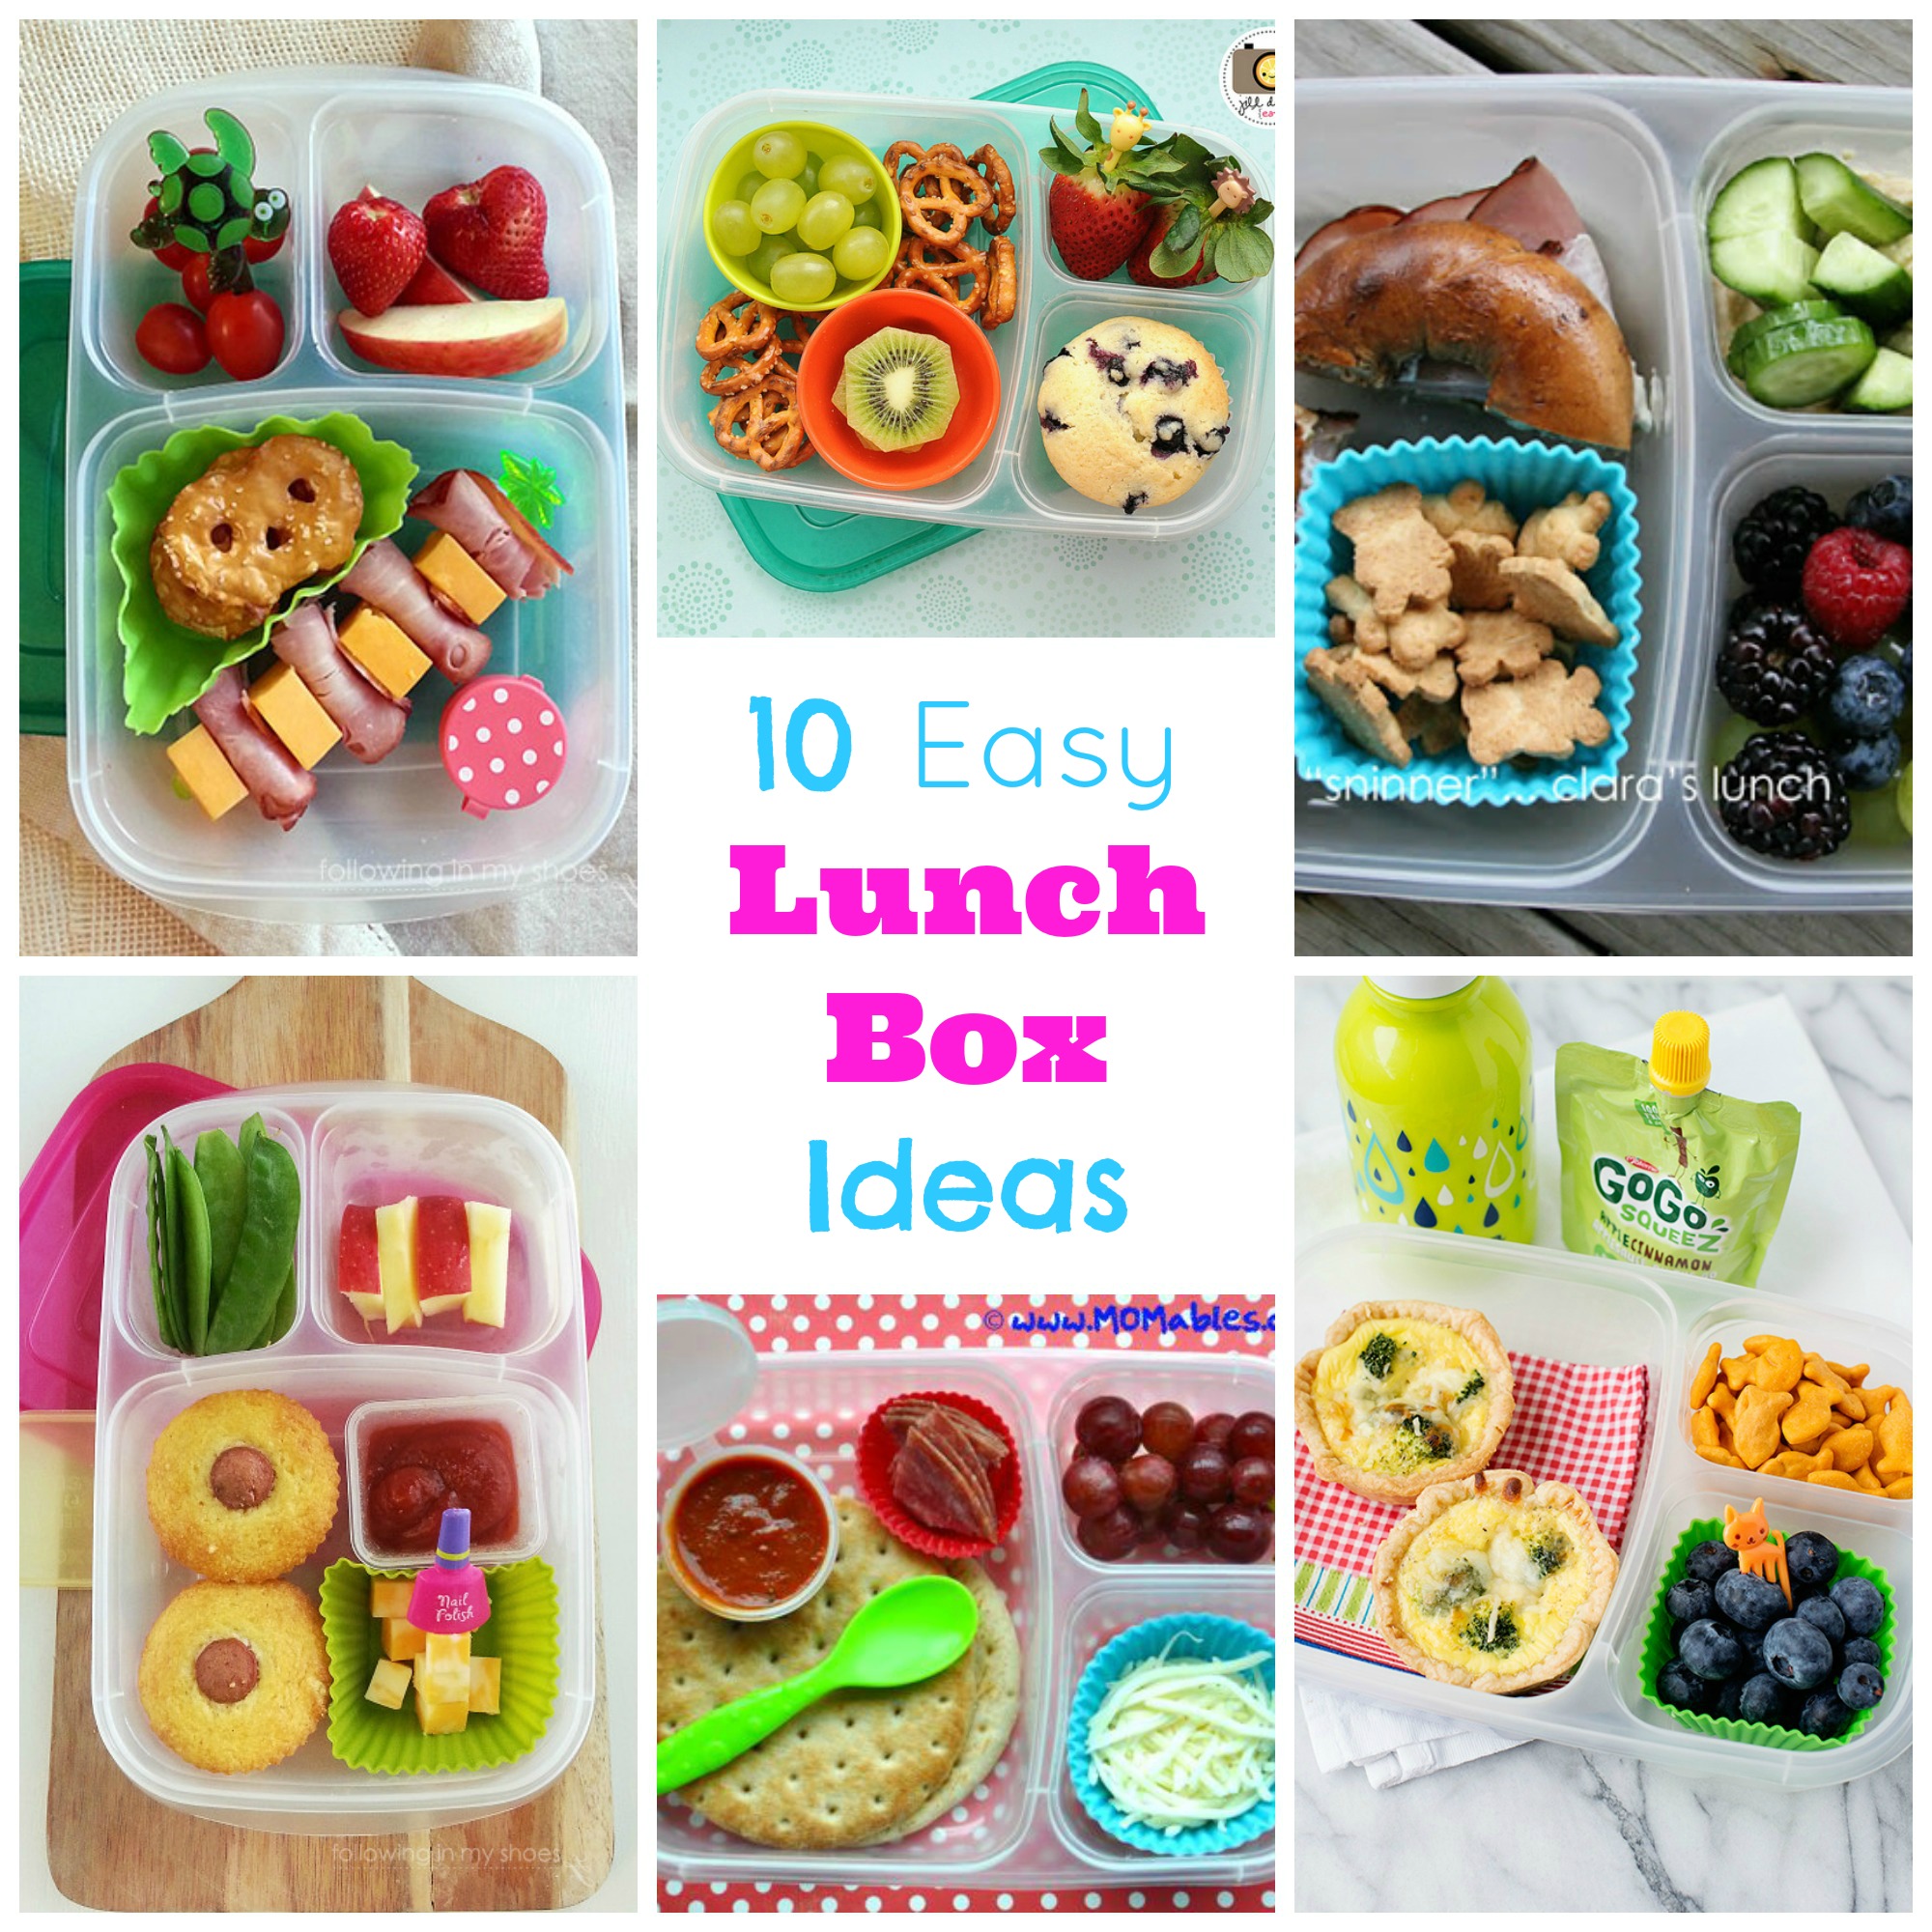 https://happyhomefairy.com/wp-content/uploads/2013/09/easy-lunchbox-ideas1.jpg